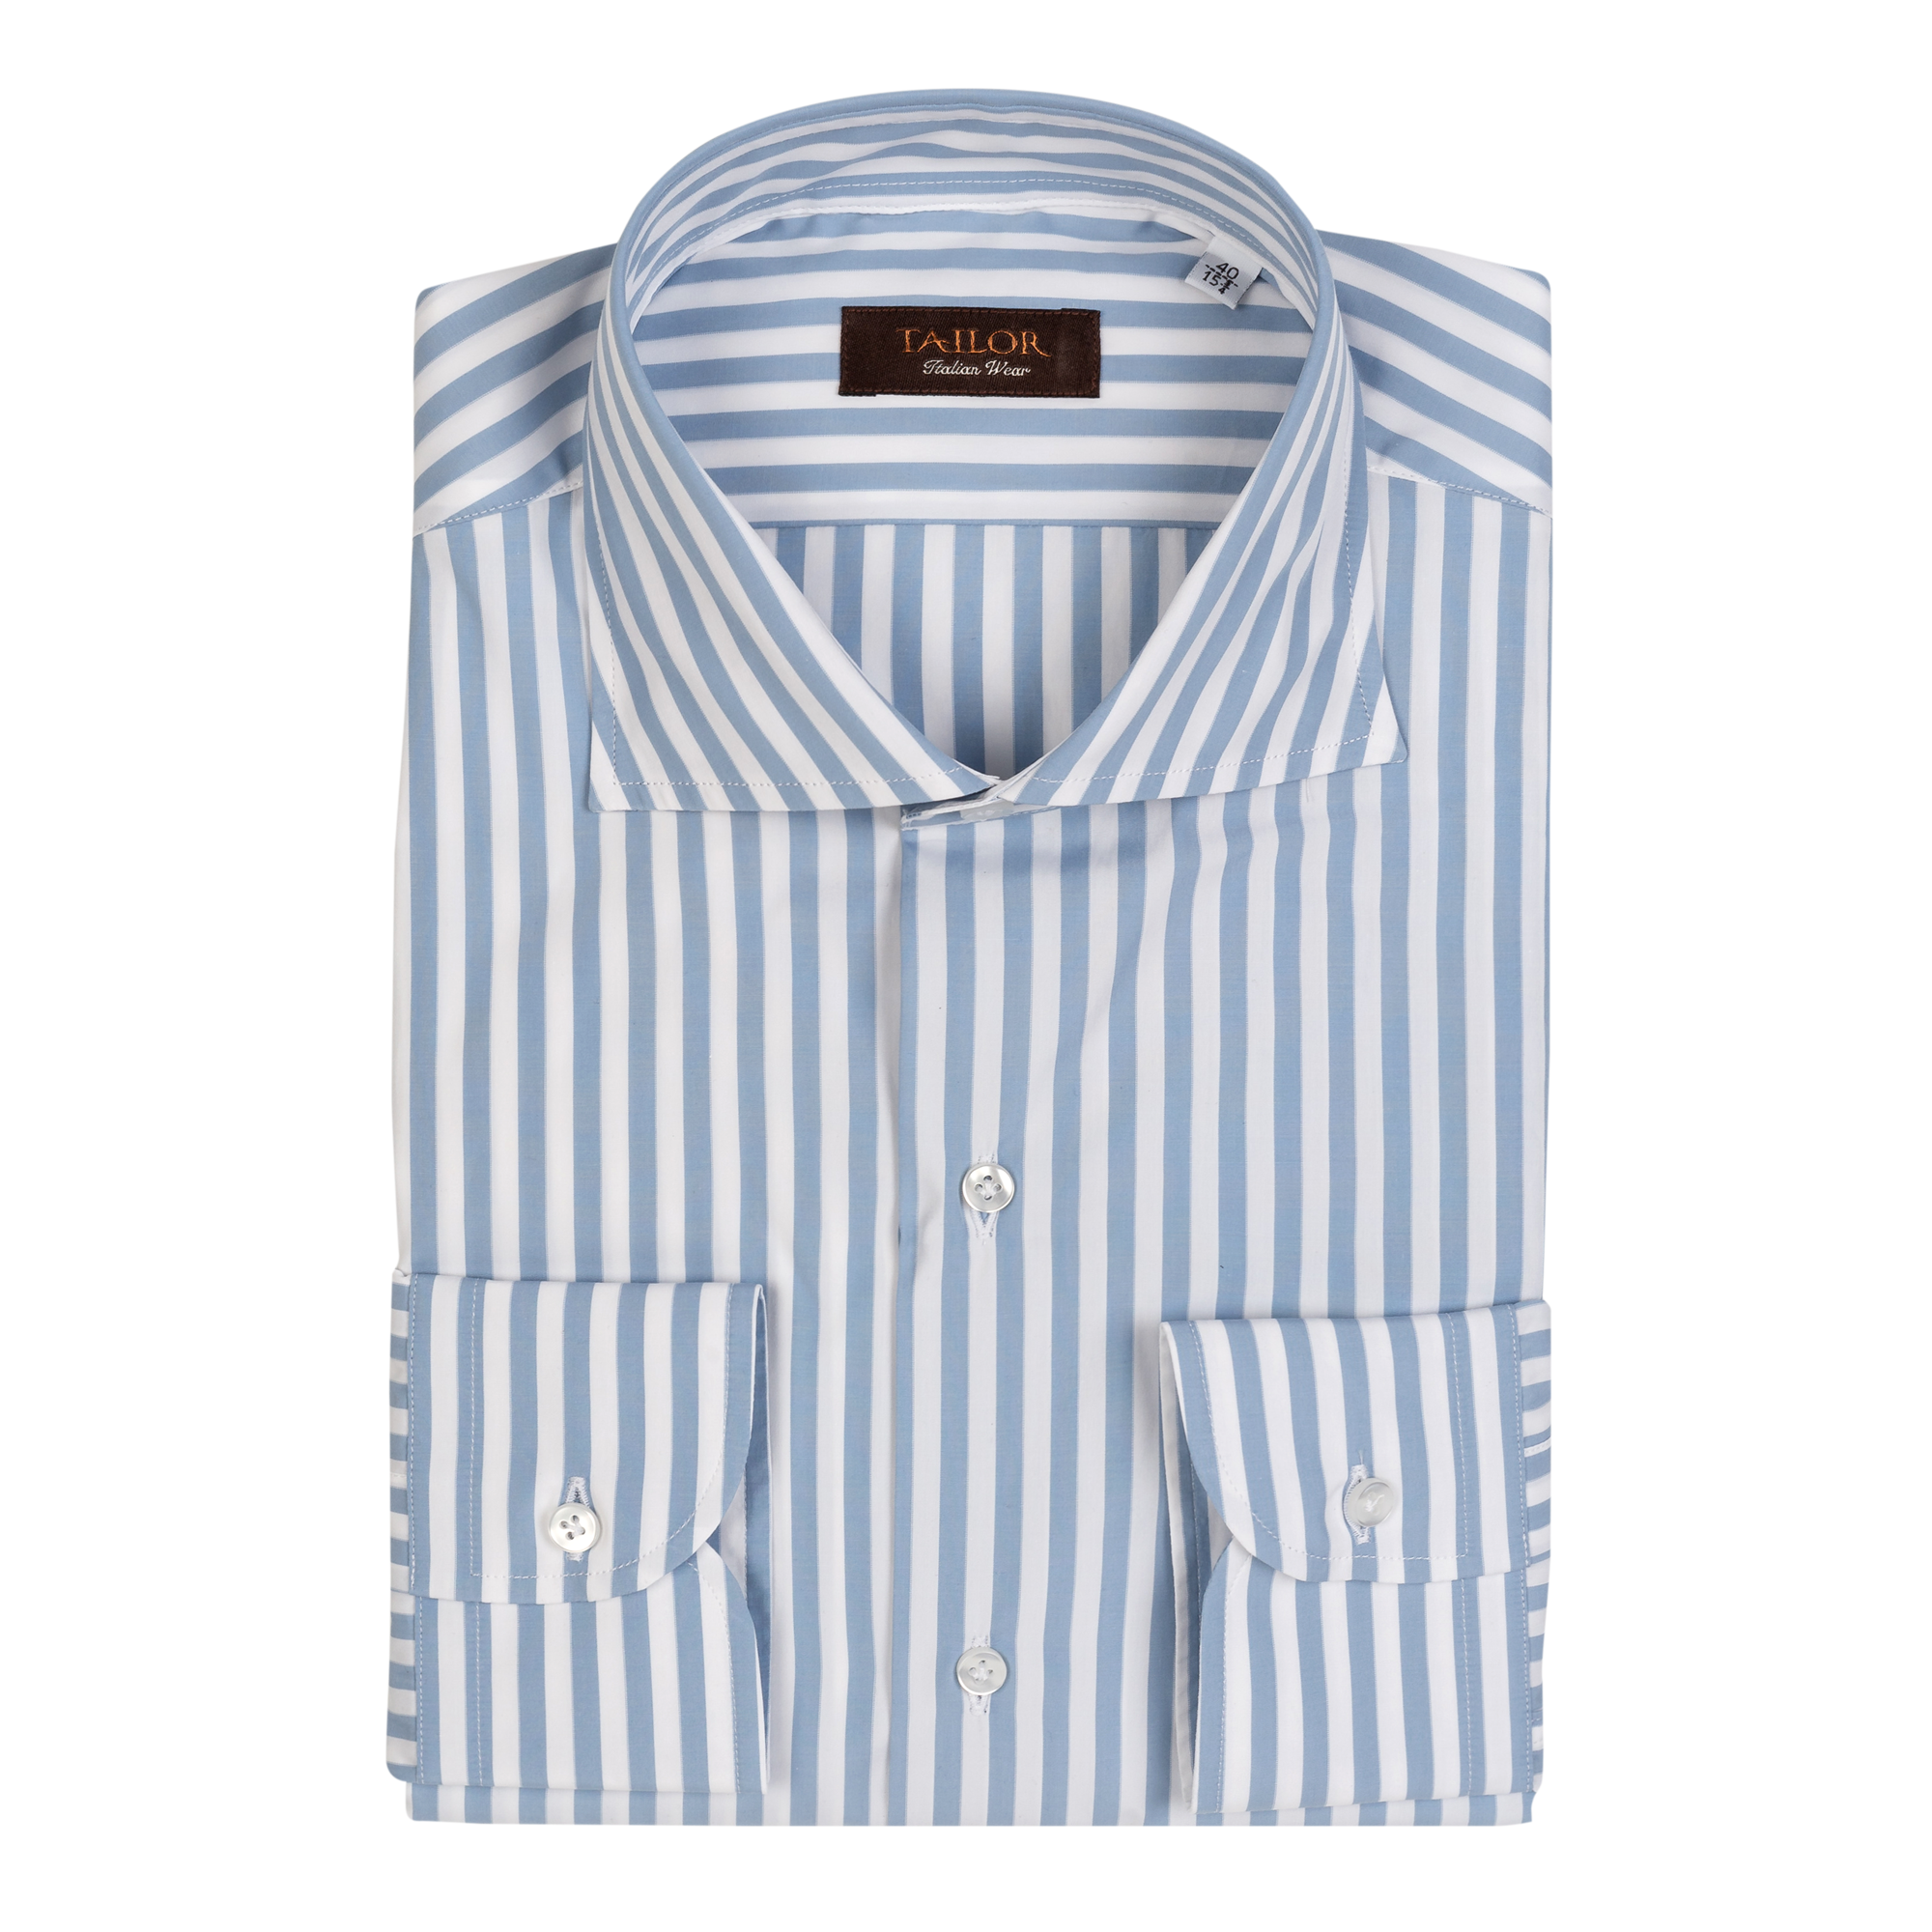 Men's sky blue bold striped shirt